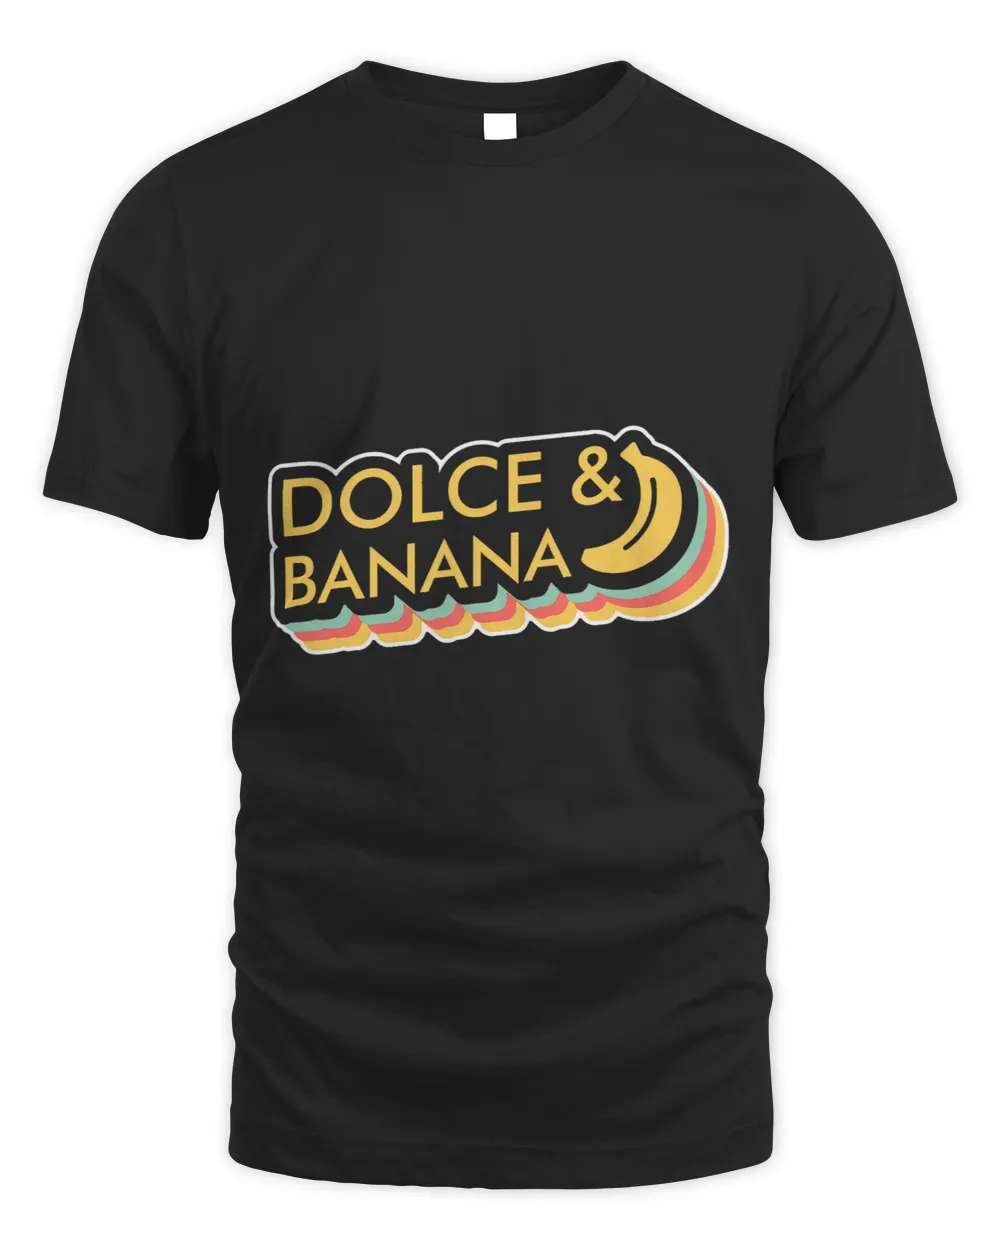 Dolce and Banana Fruit Fruit Blogger Vegan Vegetarian